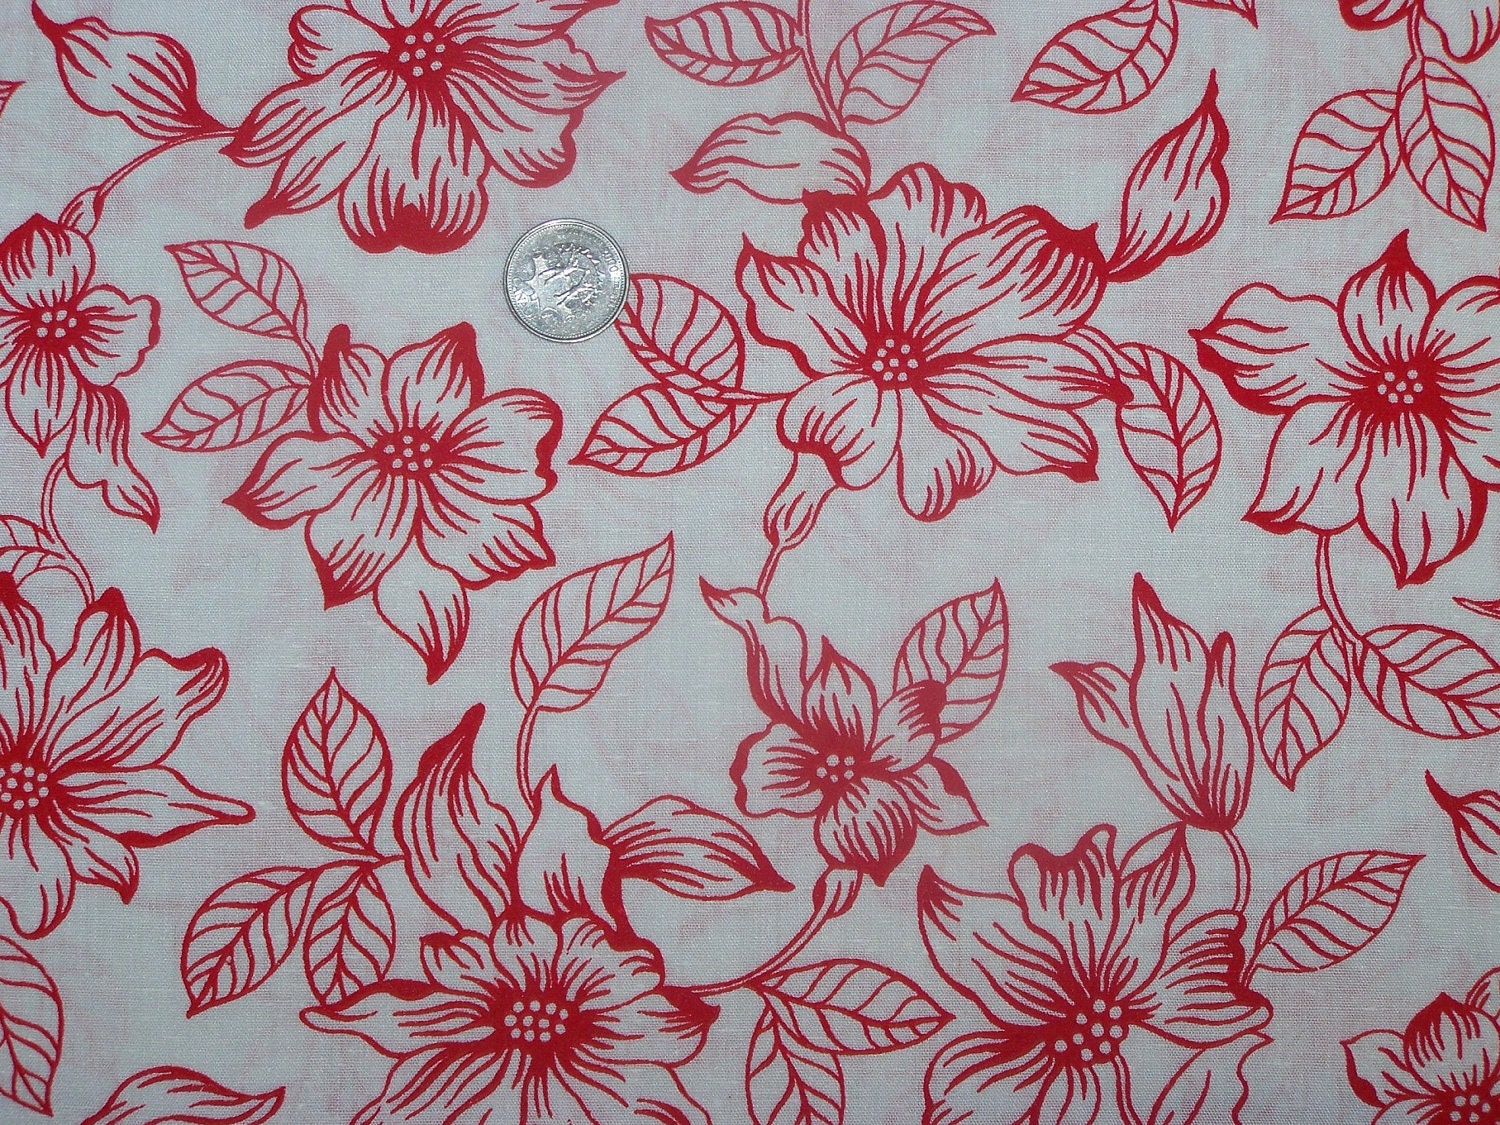 Flowers On Fabric